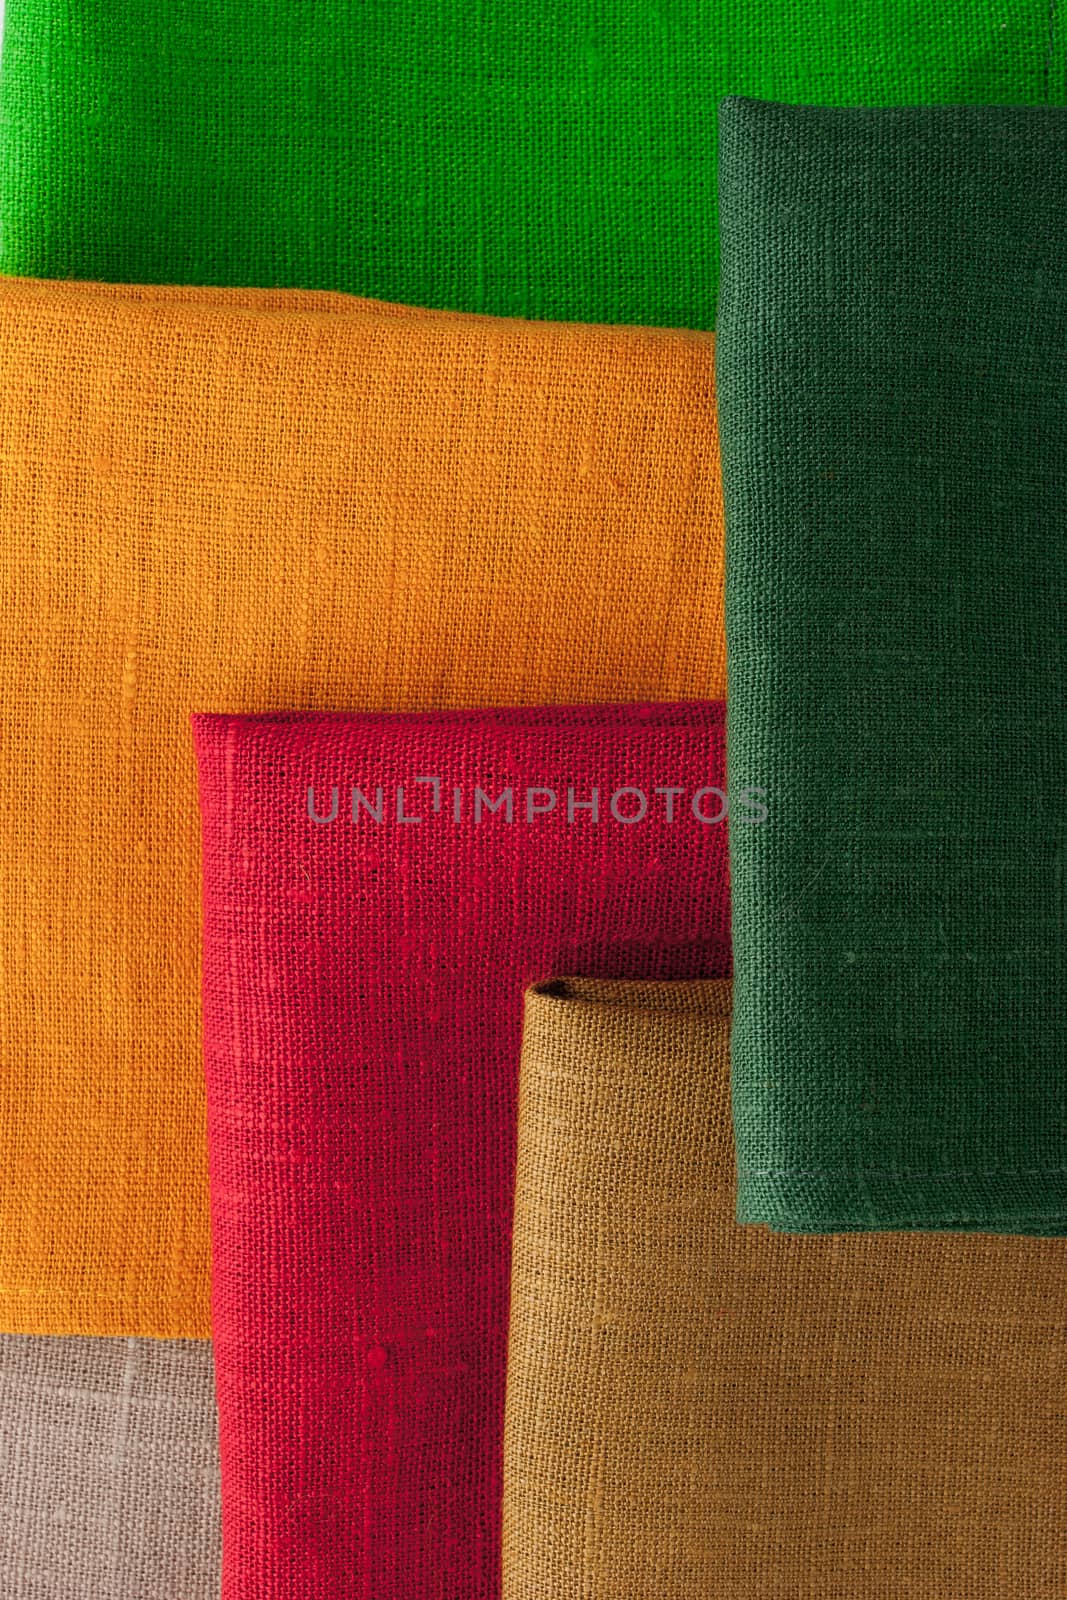 Colorful napkins  background  vertical